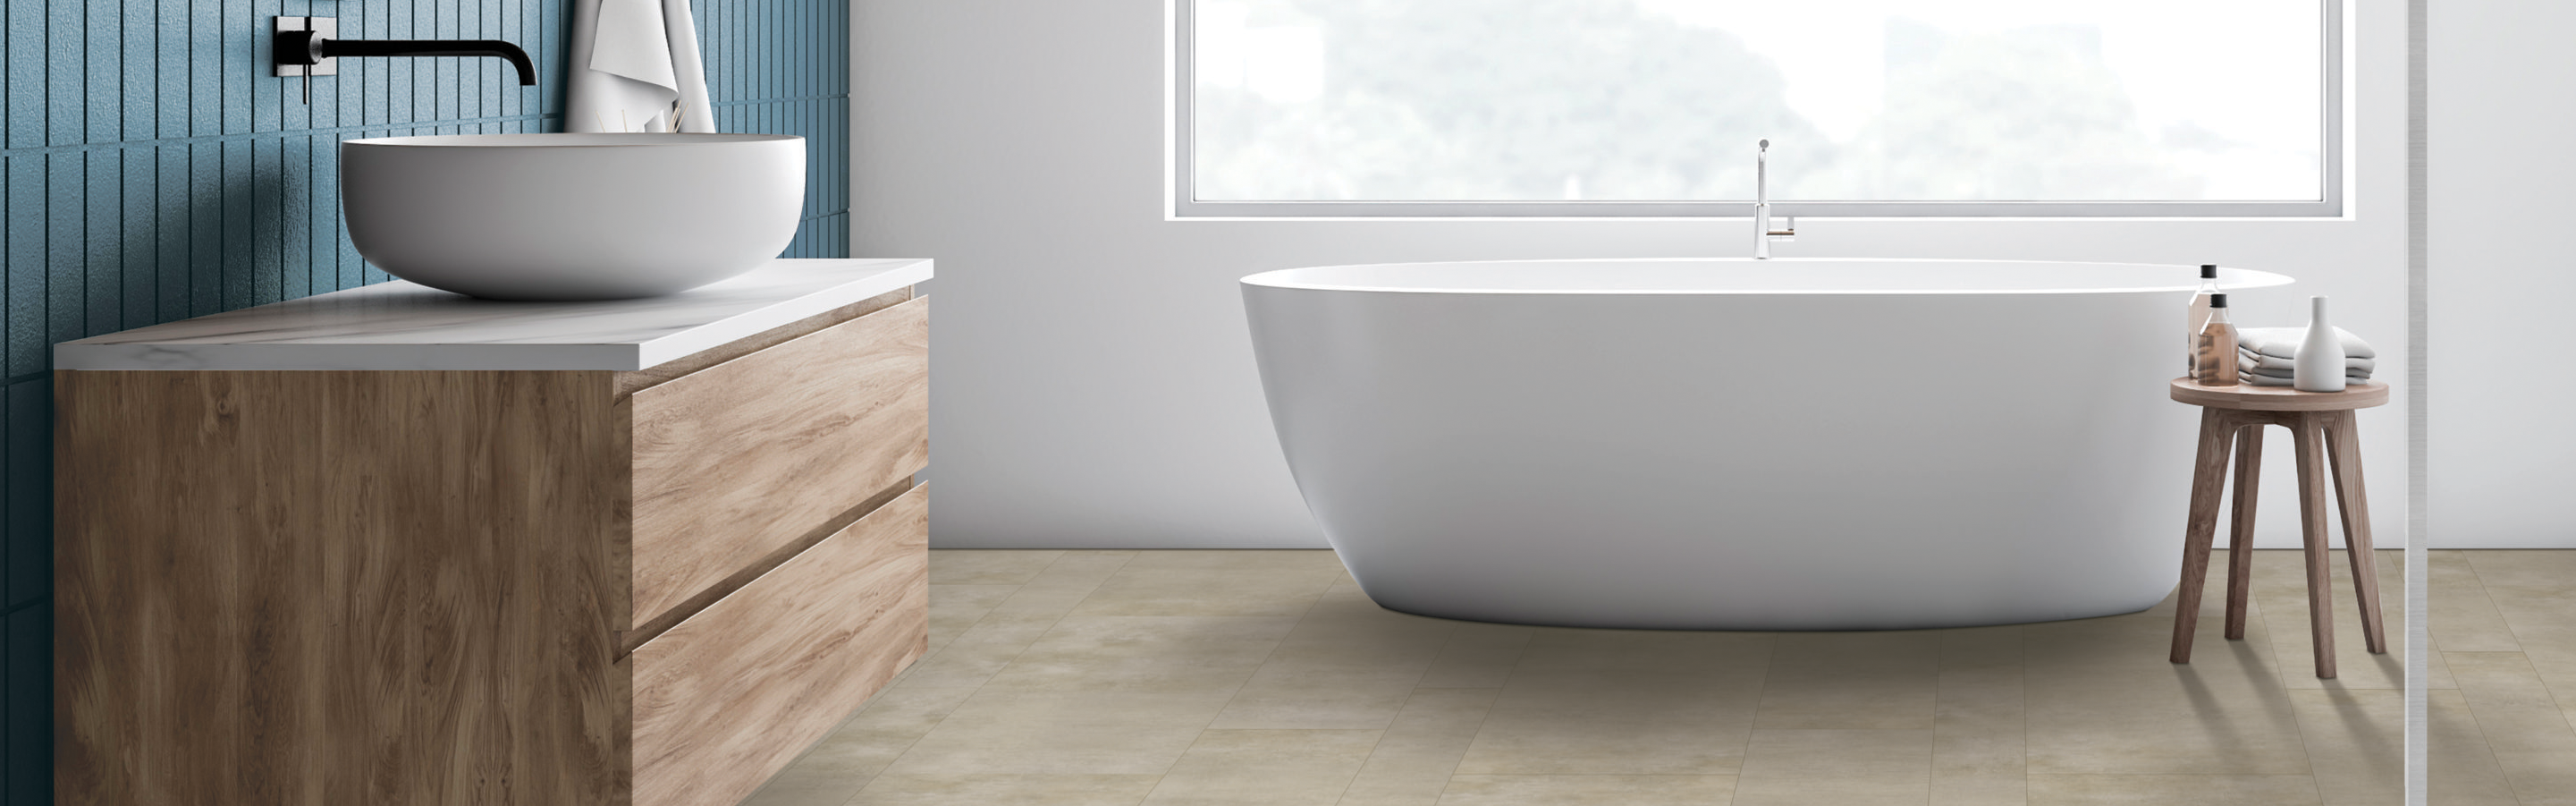 Vinyl tile tan floor in minimalist bathroom with standing tub 